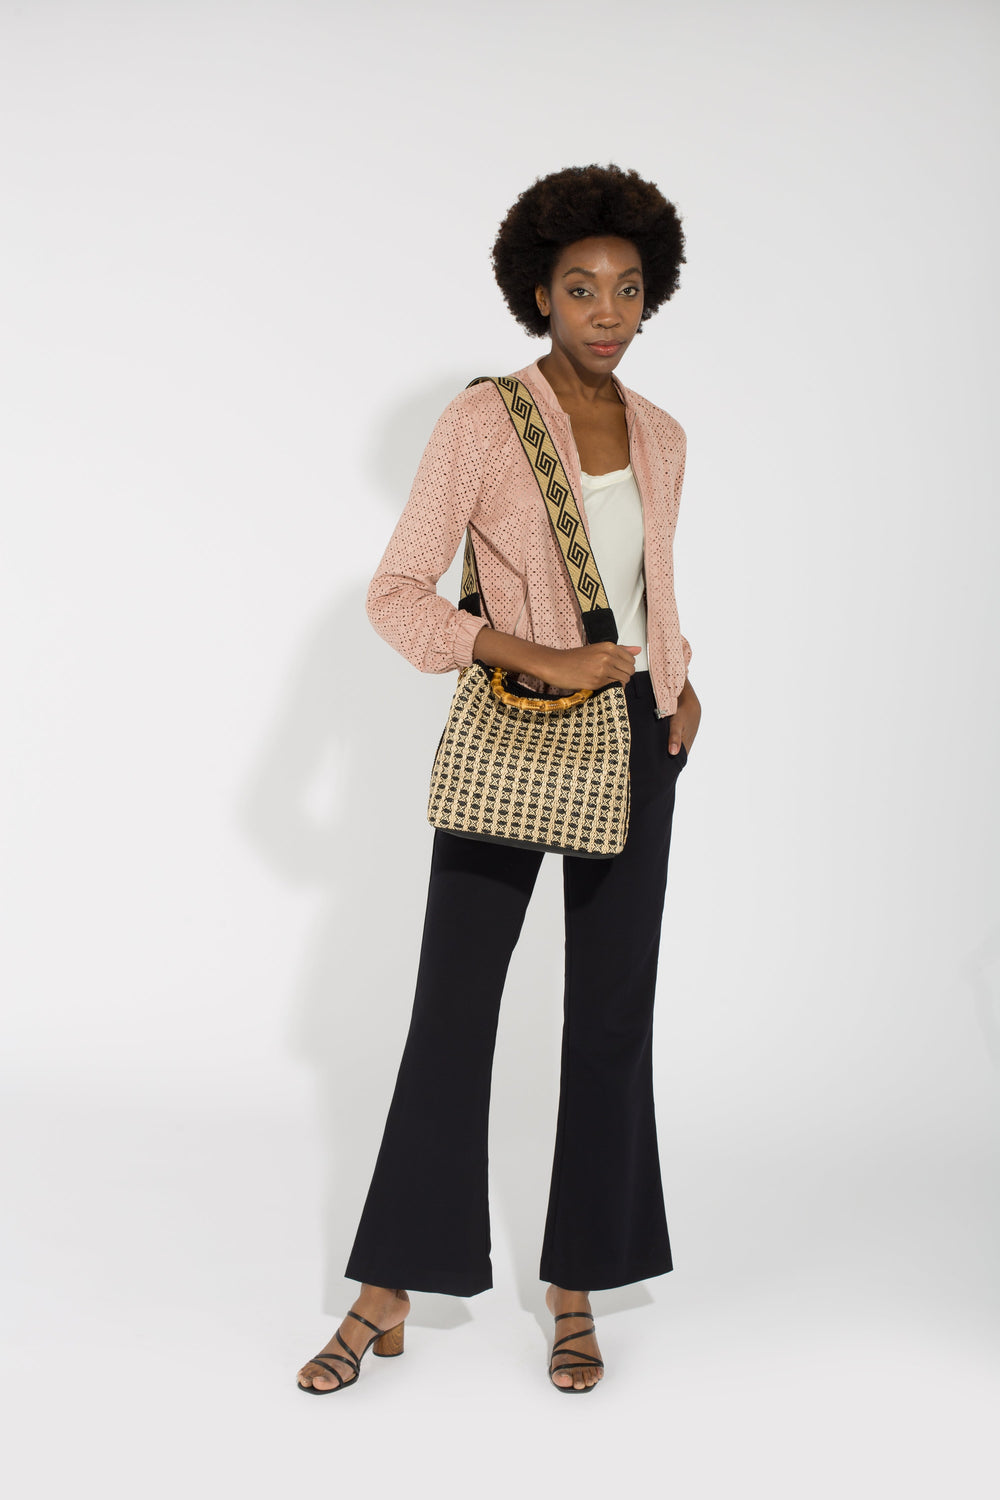 Fashionable woman in pink blazer and black pants with woven handbag